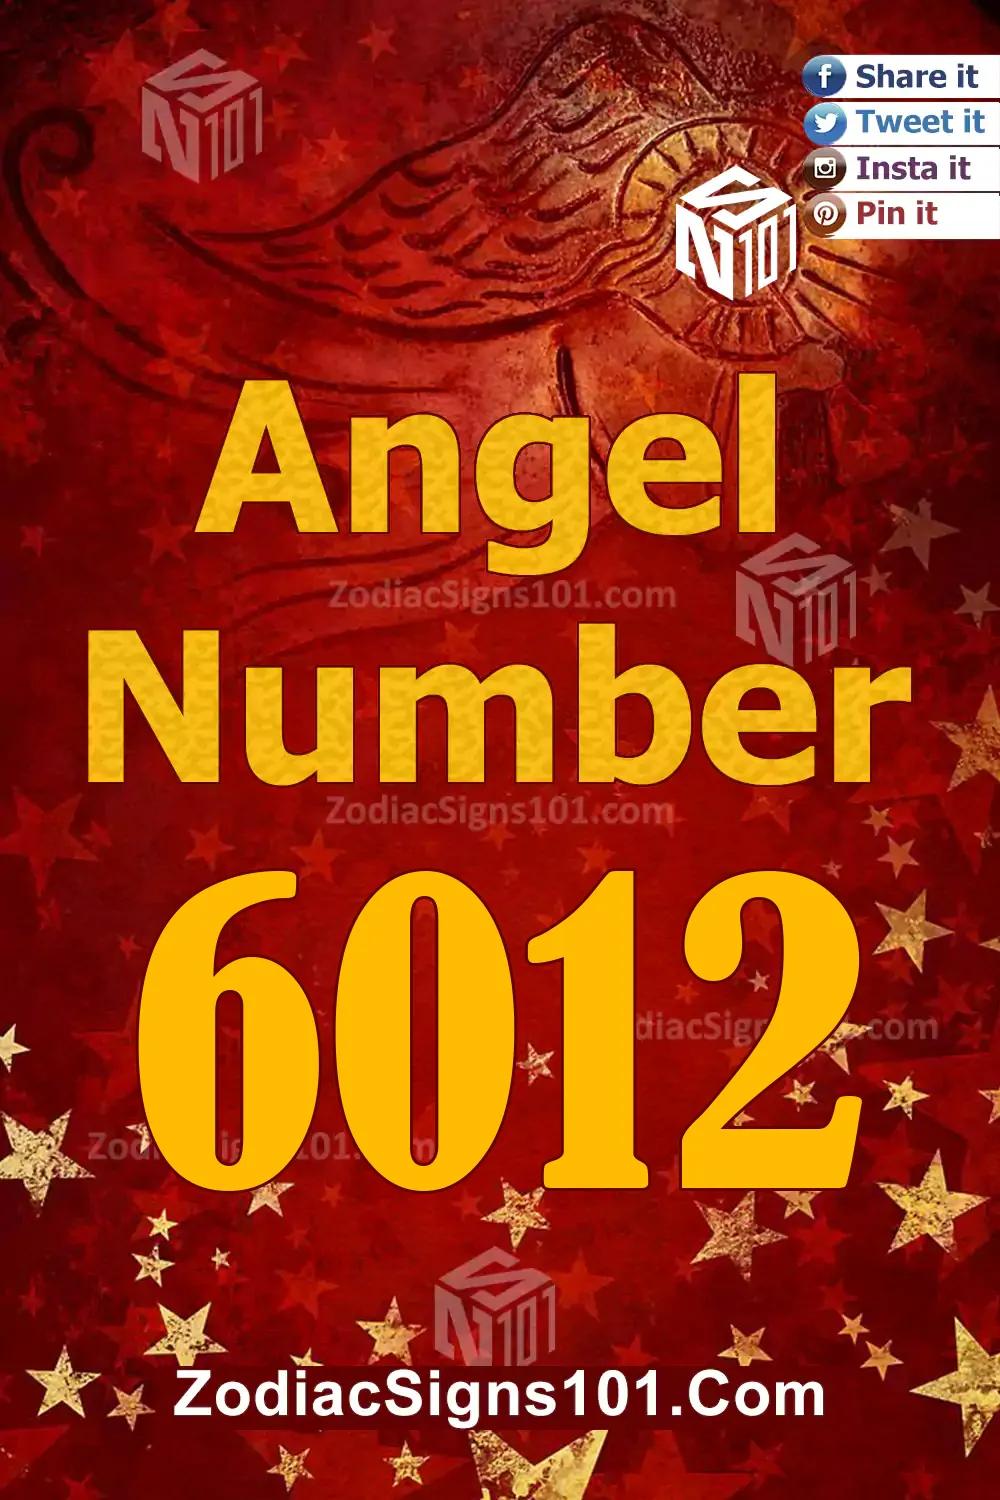 6012-Angel-Number-Meaning.jpg